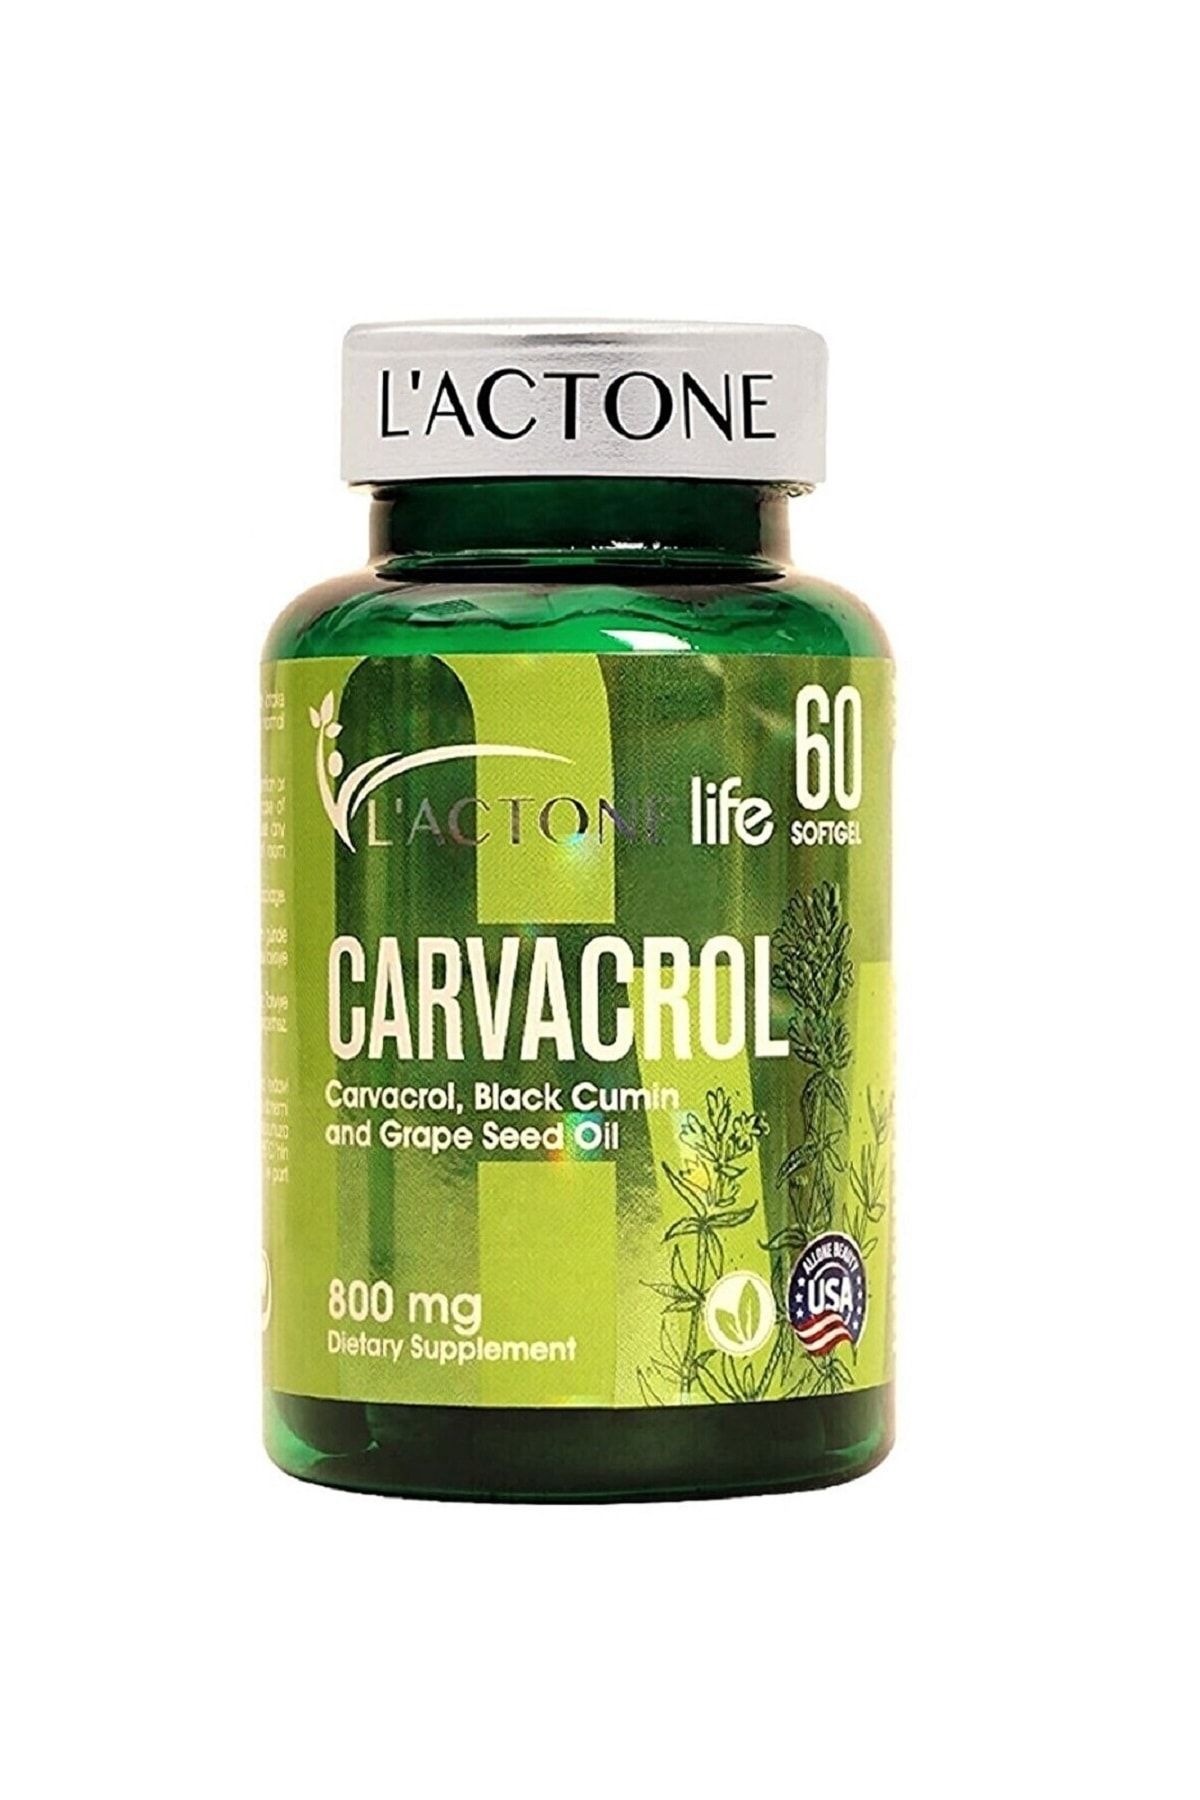 L'ACTONE life Carvacrol 800 mg / 60 Softgel - Karvakrol